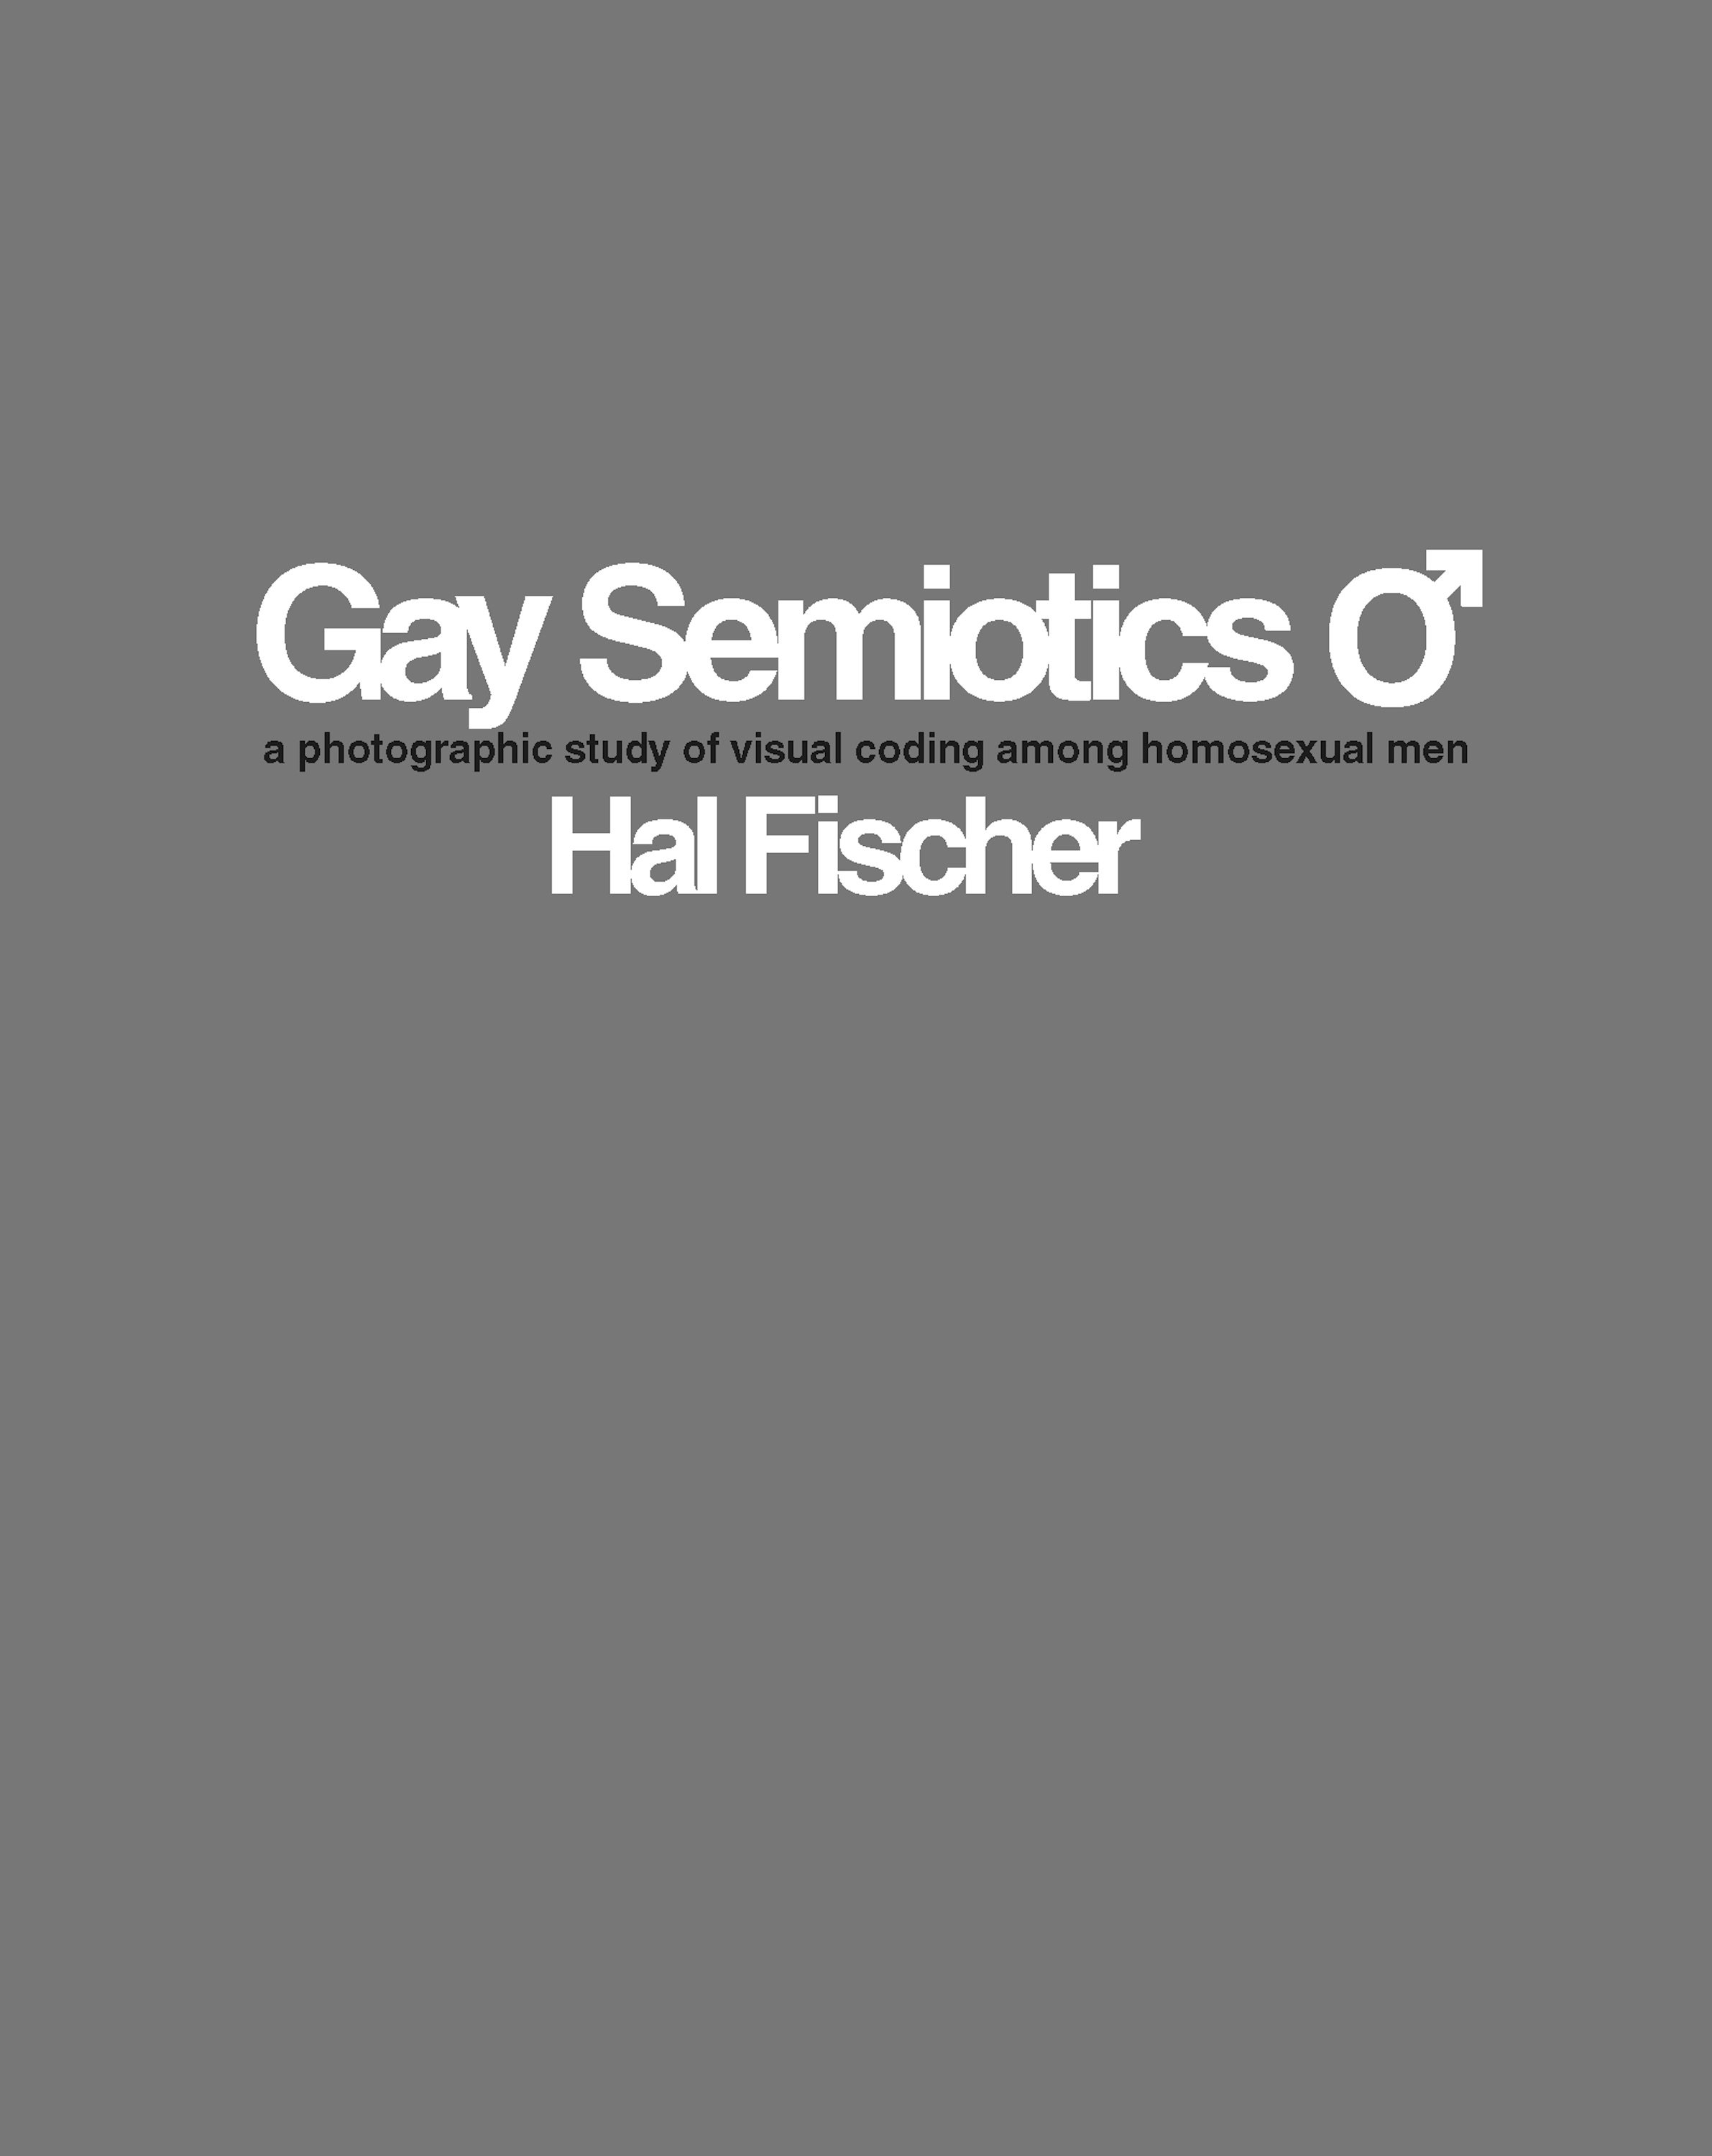 GaySemiotics_Cover1.jpg